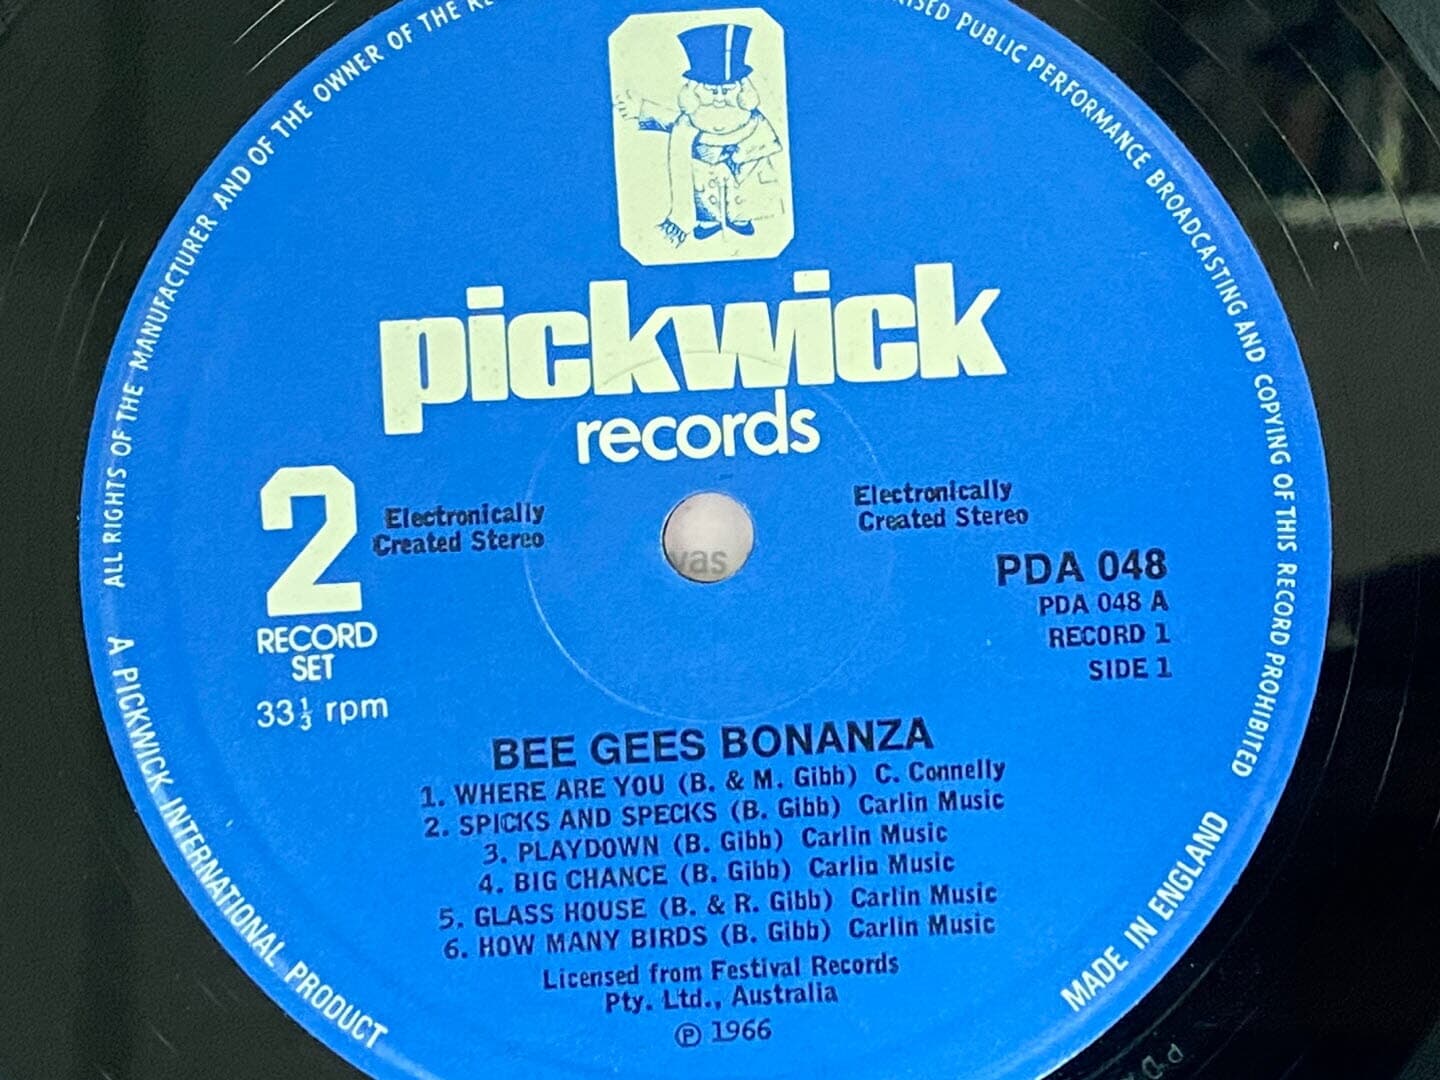 [LP] 비지스 - Bee Gees - The Bee Gees Bonanza The Early Days 2Lps [U.K반]